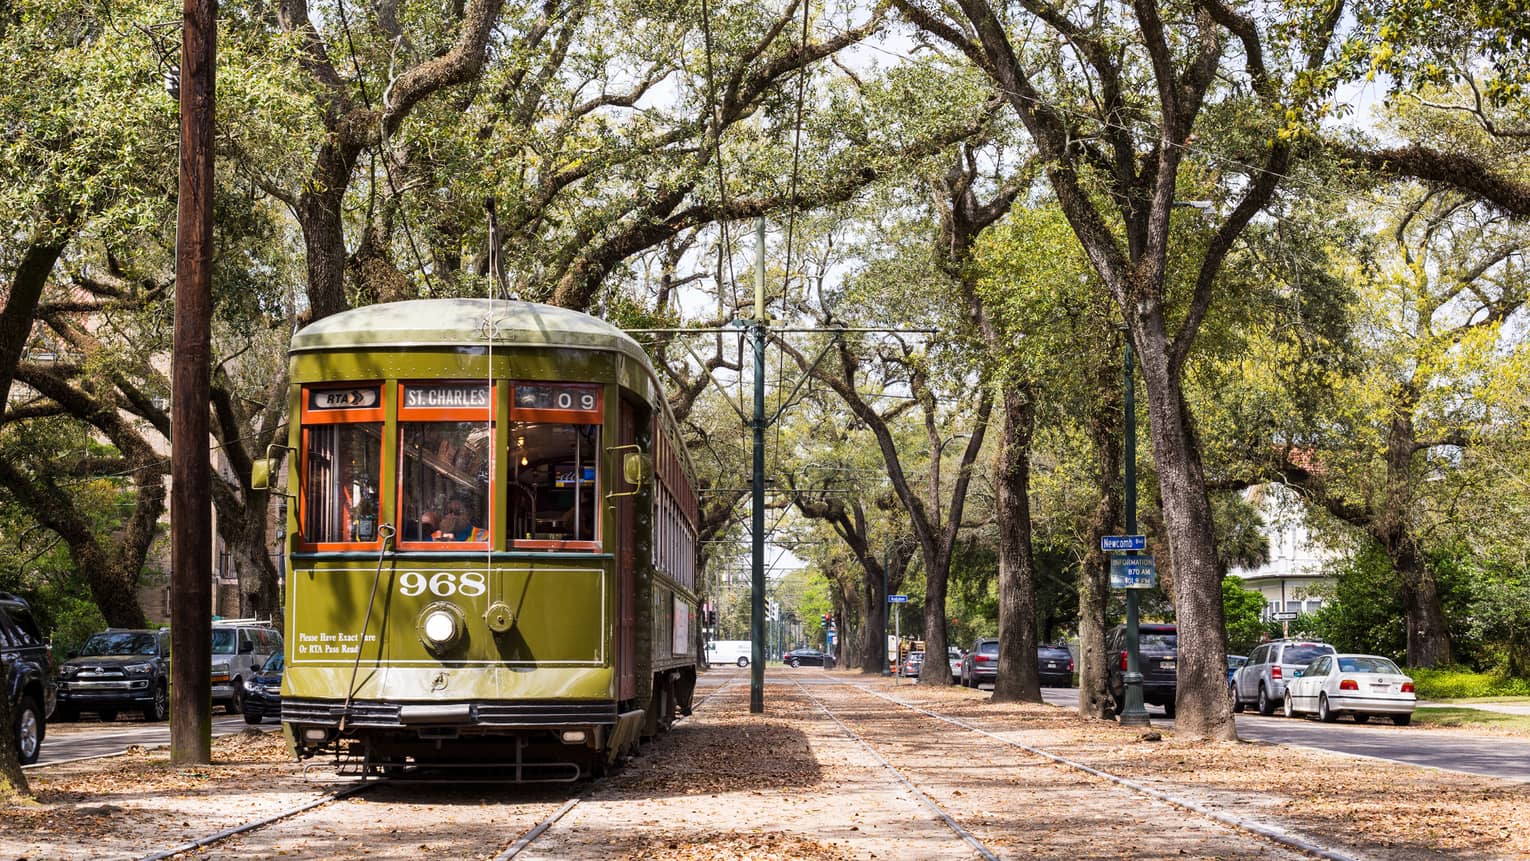 Vintage streetcar on track between trees on New Orleans street